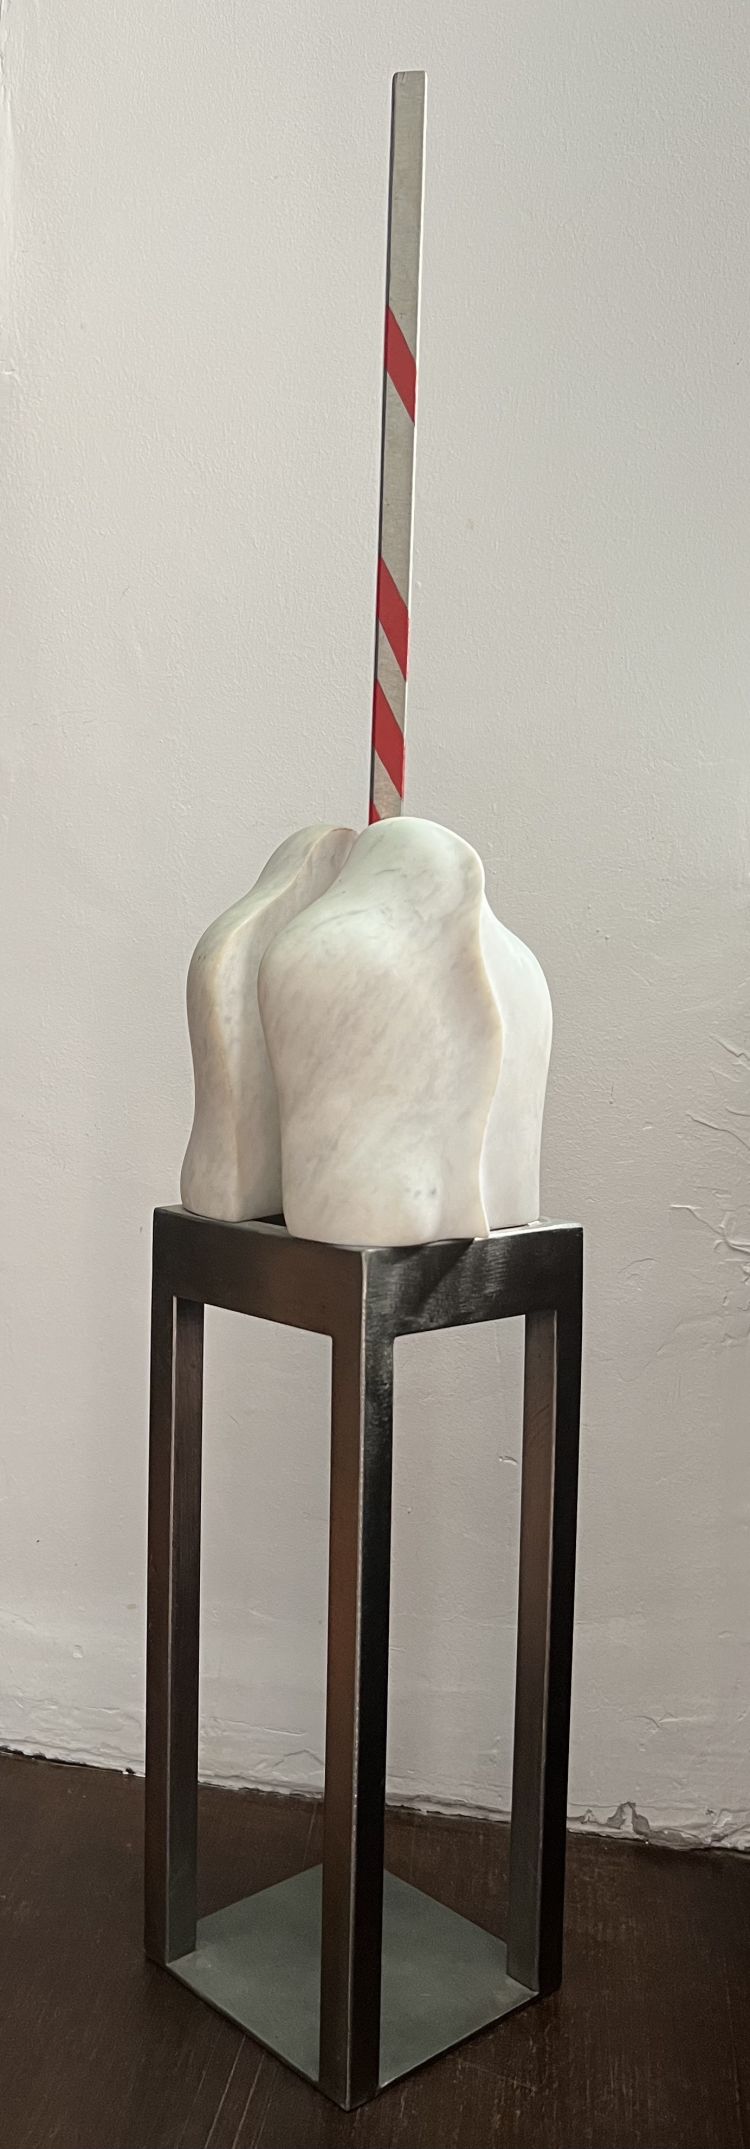 LEUBA Erica Erica Leuba, "senza titolo", scultura di metallo e marmo, 68 x 11 x 11 cm, ca. 1980.